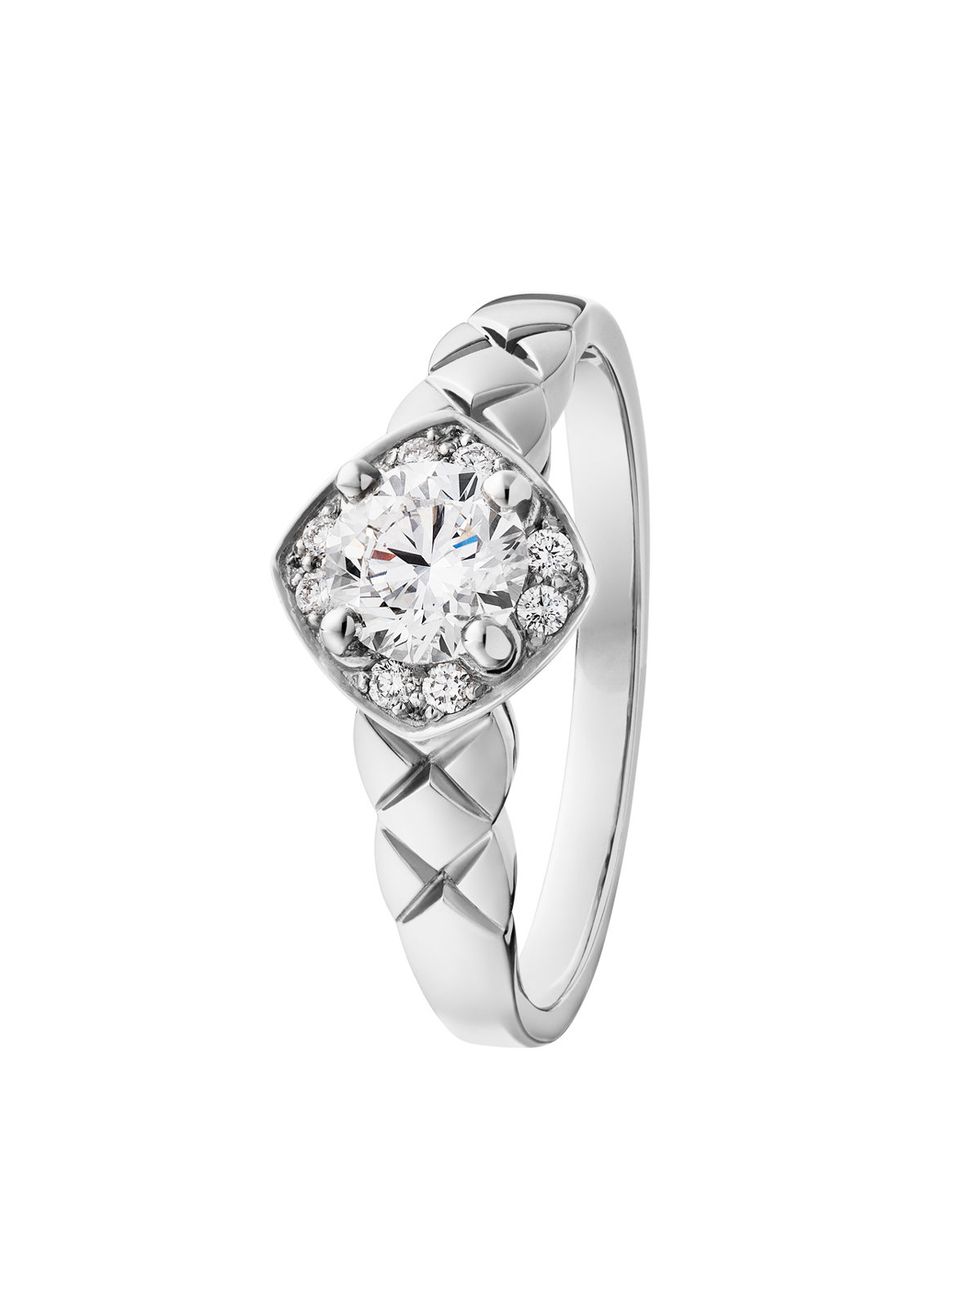 Jewellery, Fashion accessory, Ring, Engagement ring, Pre-engagement ring, Platinum, Diamond, Body jewelry, Gemstone, Metal, 